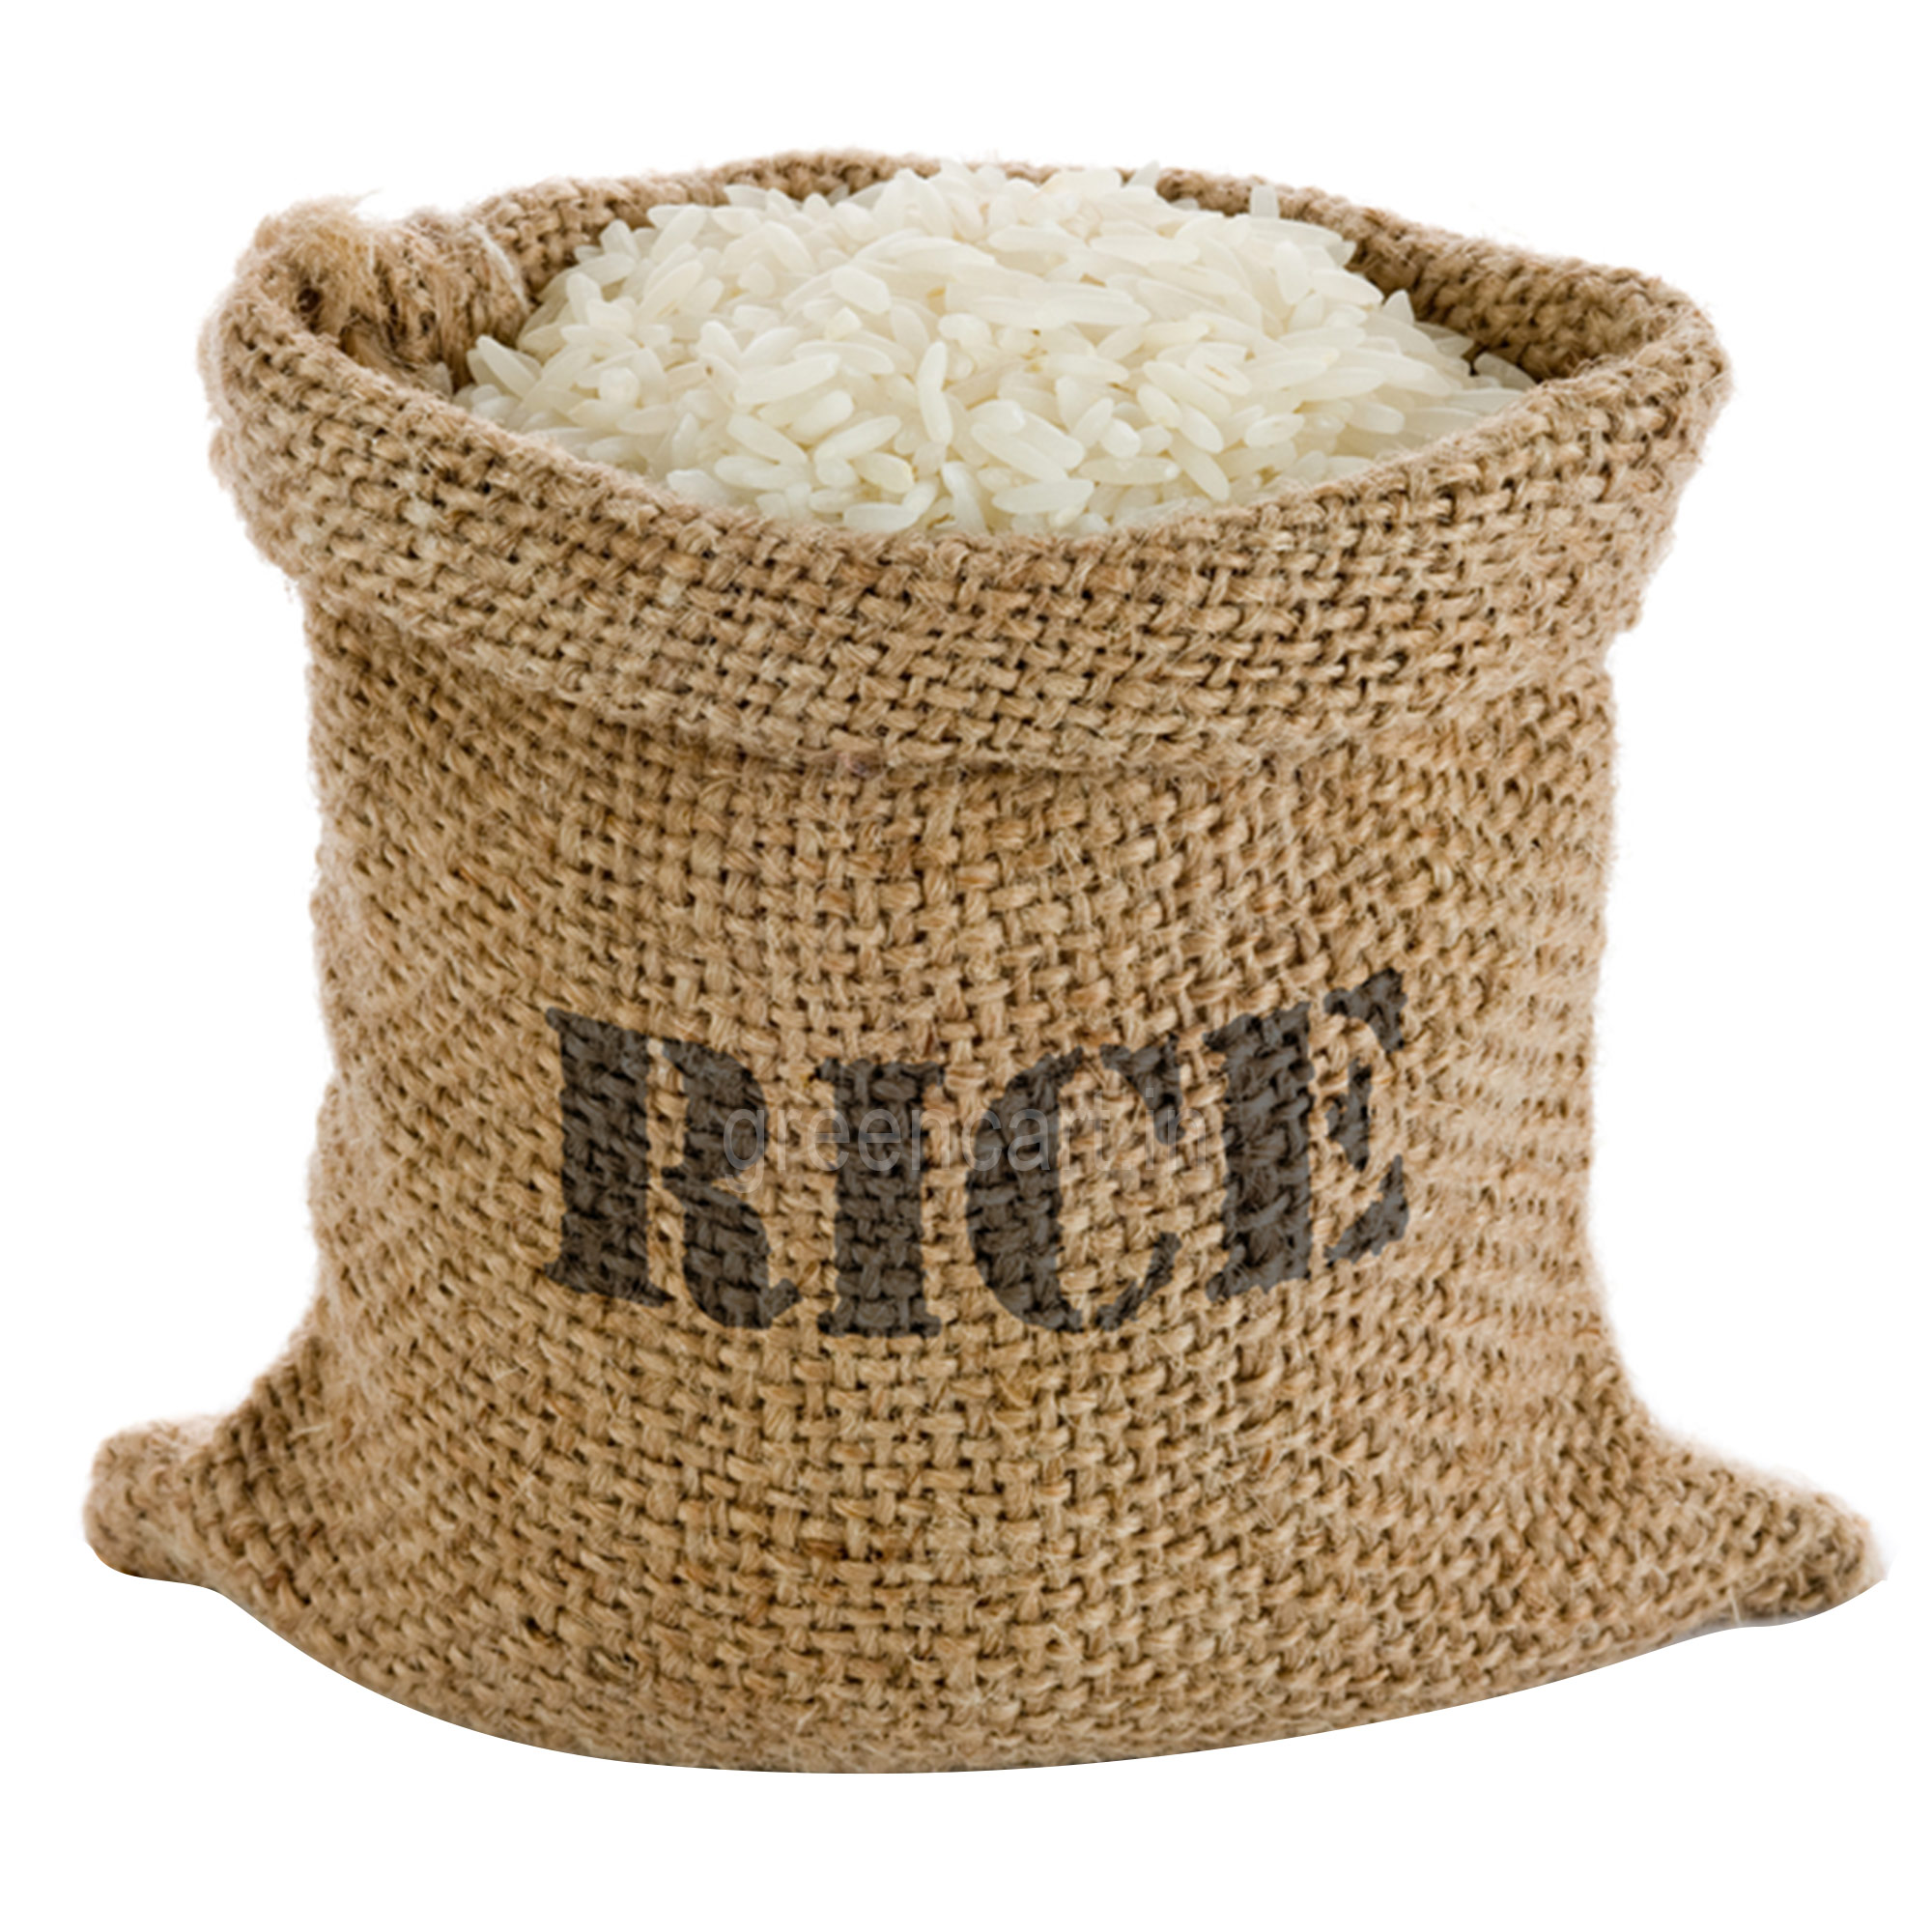 Rice Wholesale Price, Rice Wh